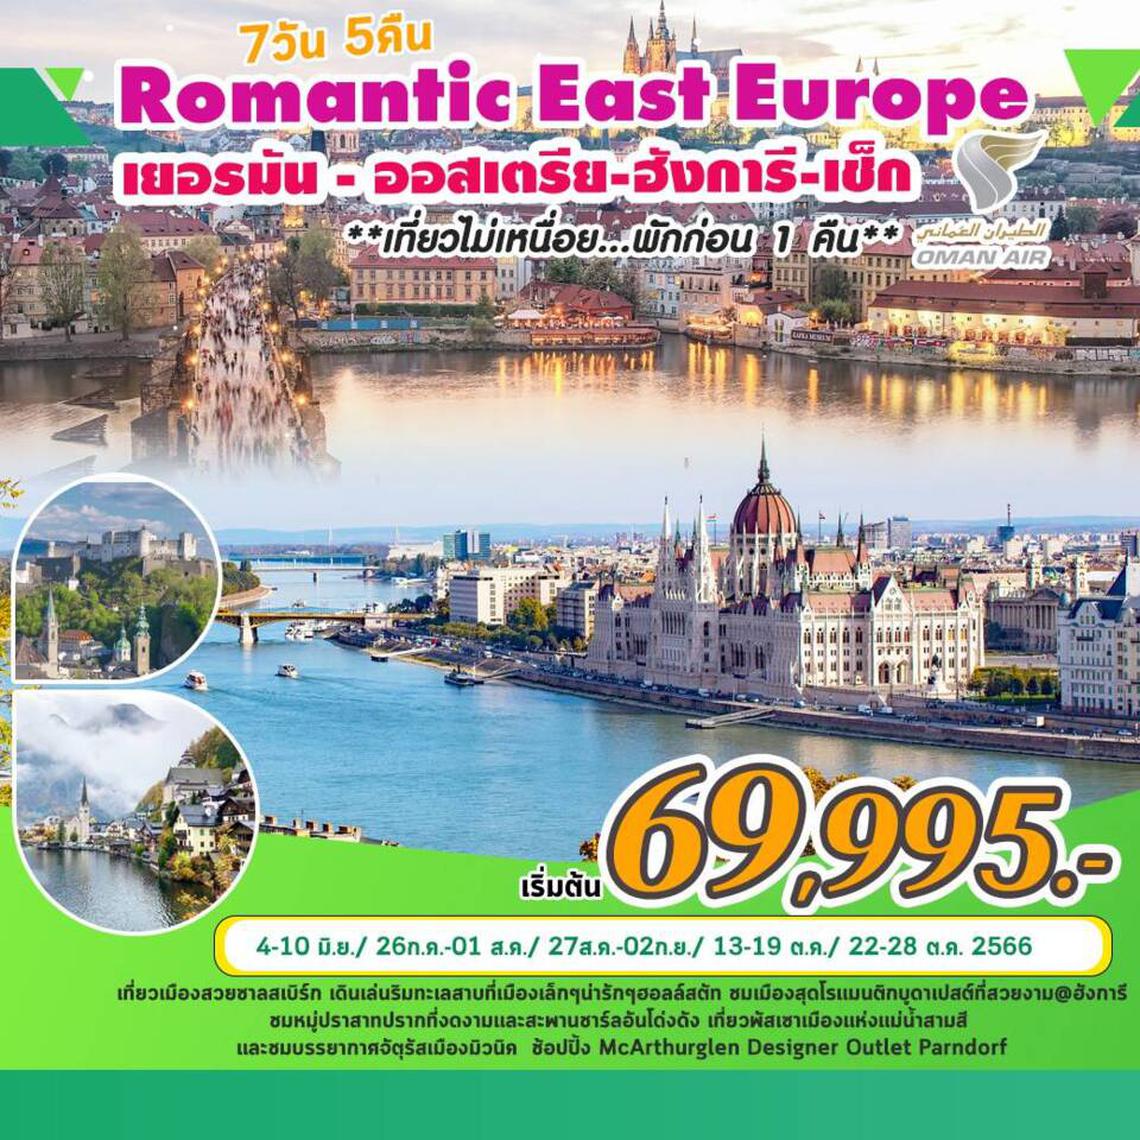 VTG-EE4CPS Romantic East Europe 